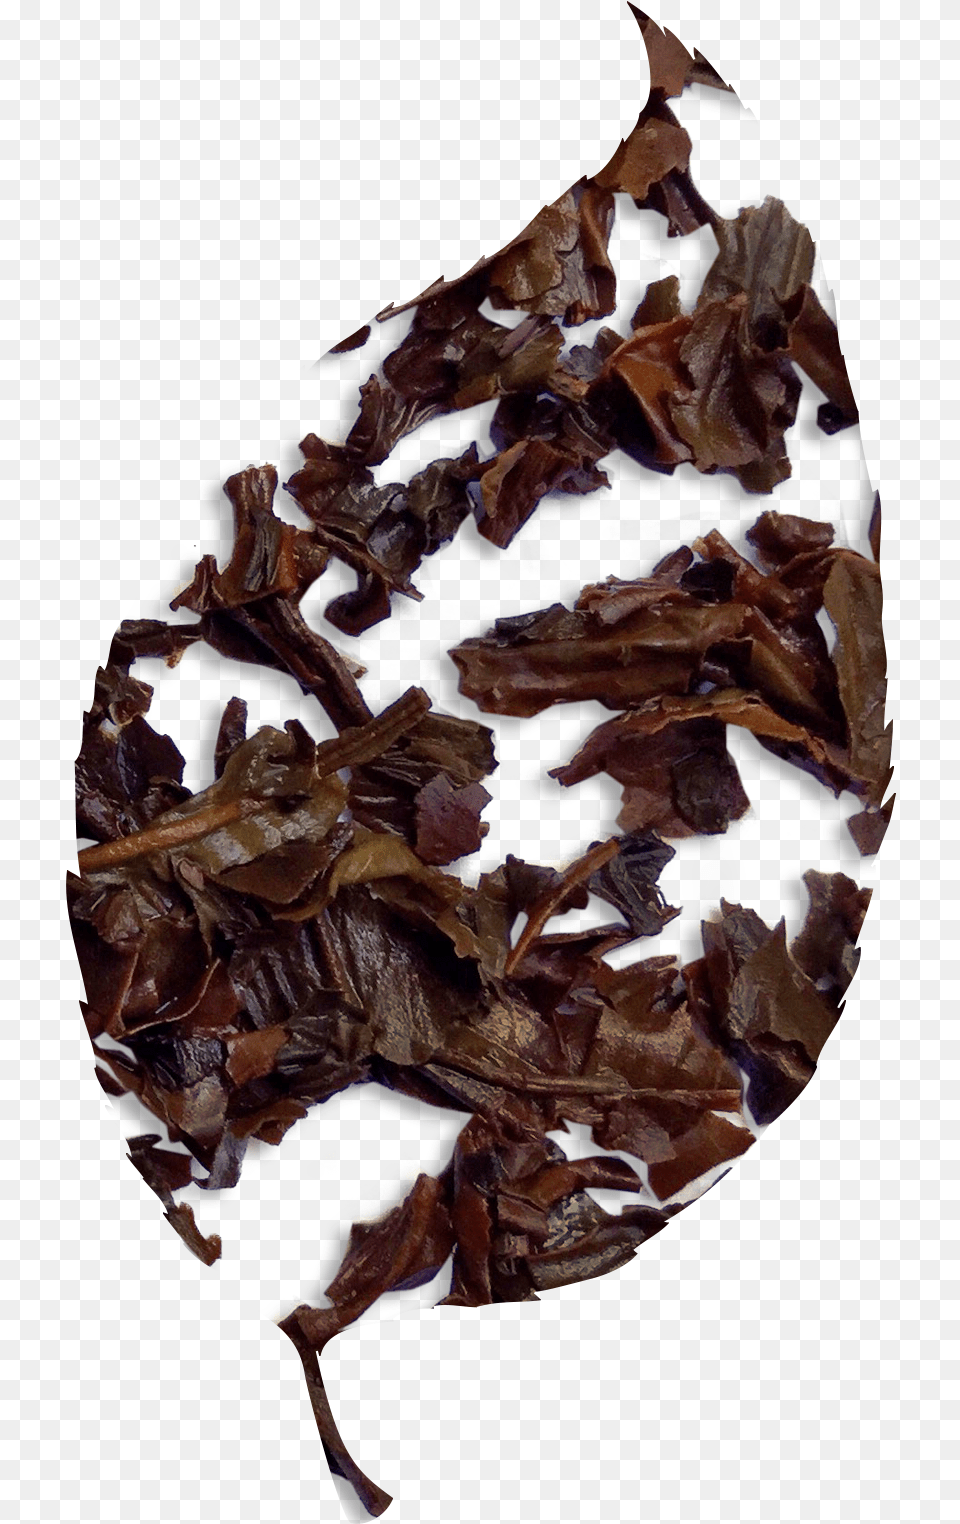 Black Tea Leaves Download Chocolate, Leaf, Plant, Sphere Png Image